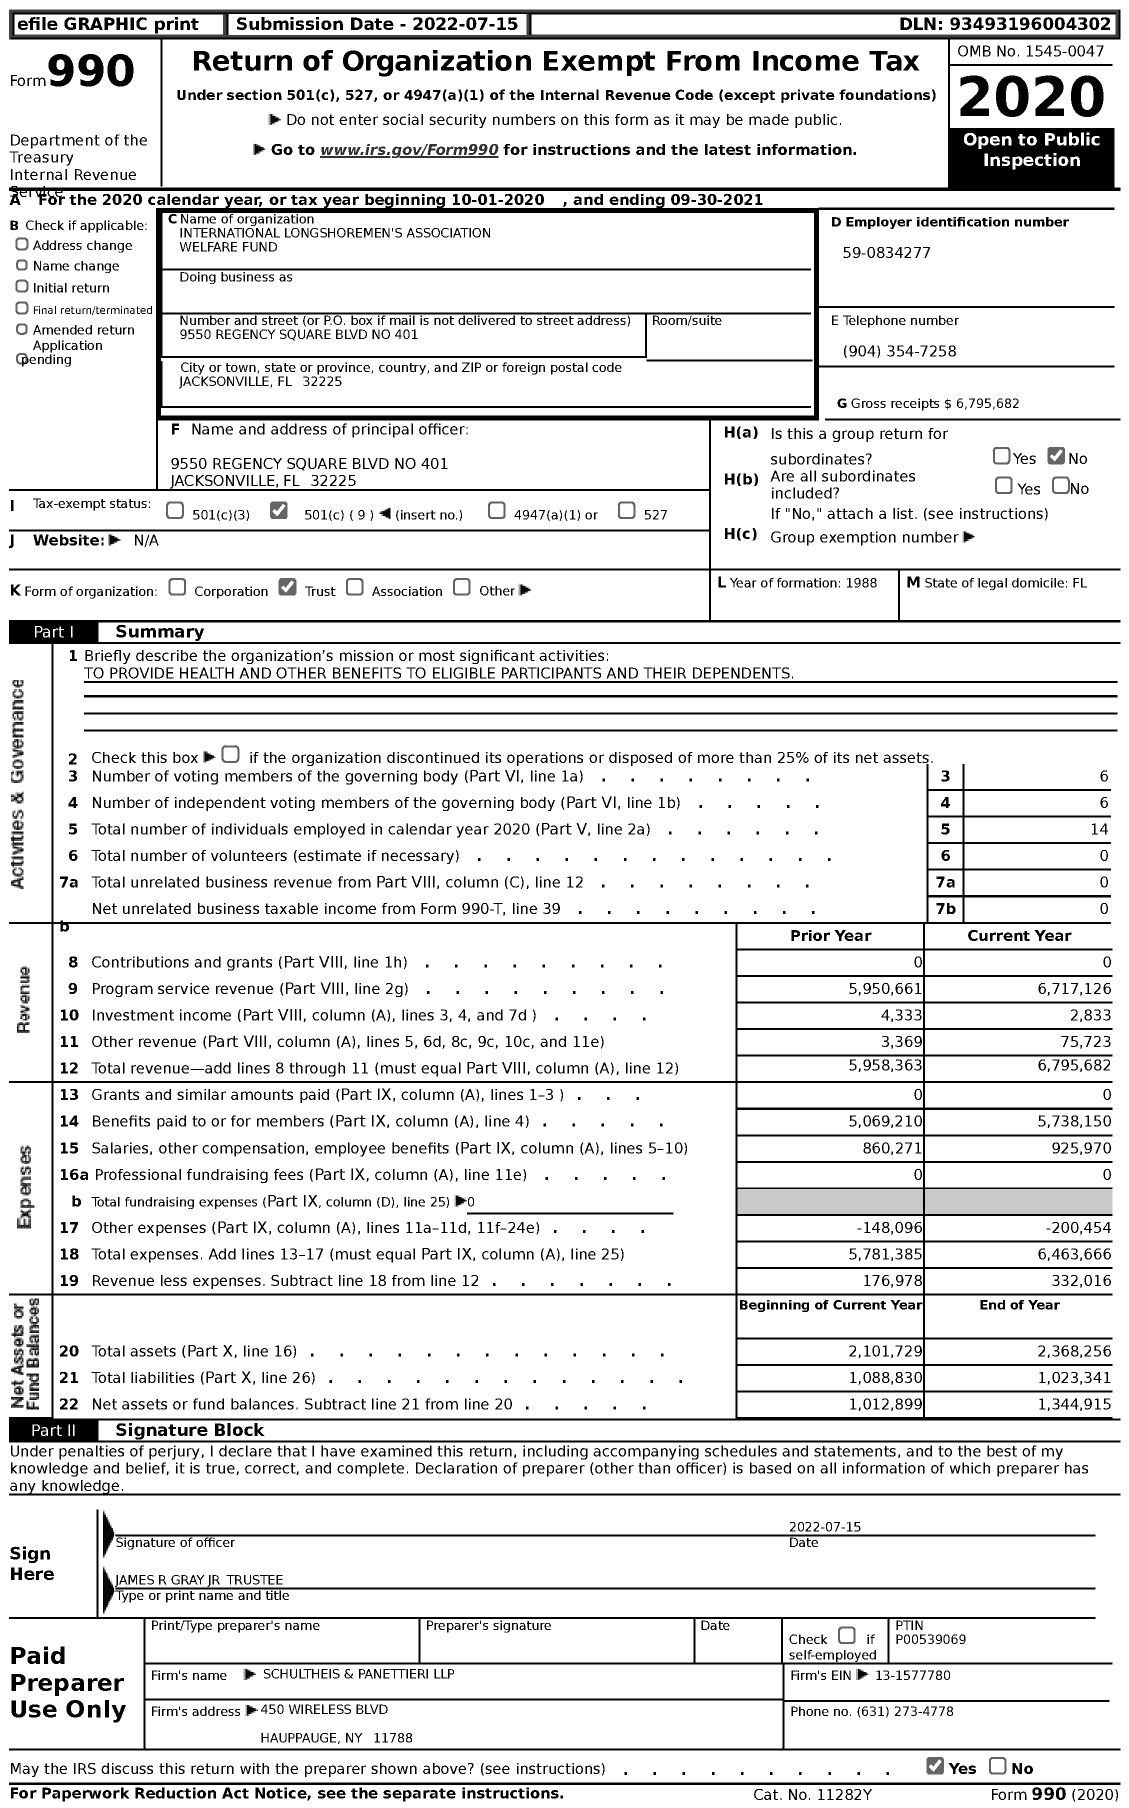 Image of first page of 2020 Form 990 for International Longshoremen's Association Welfare Fund